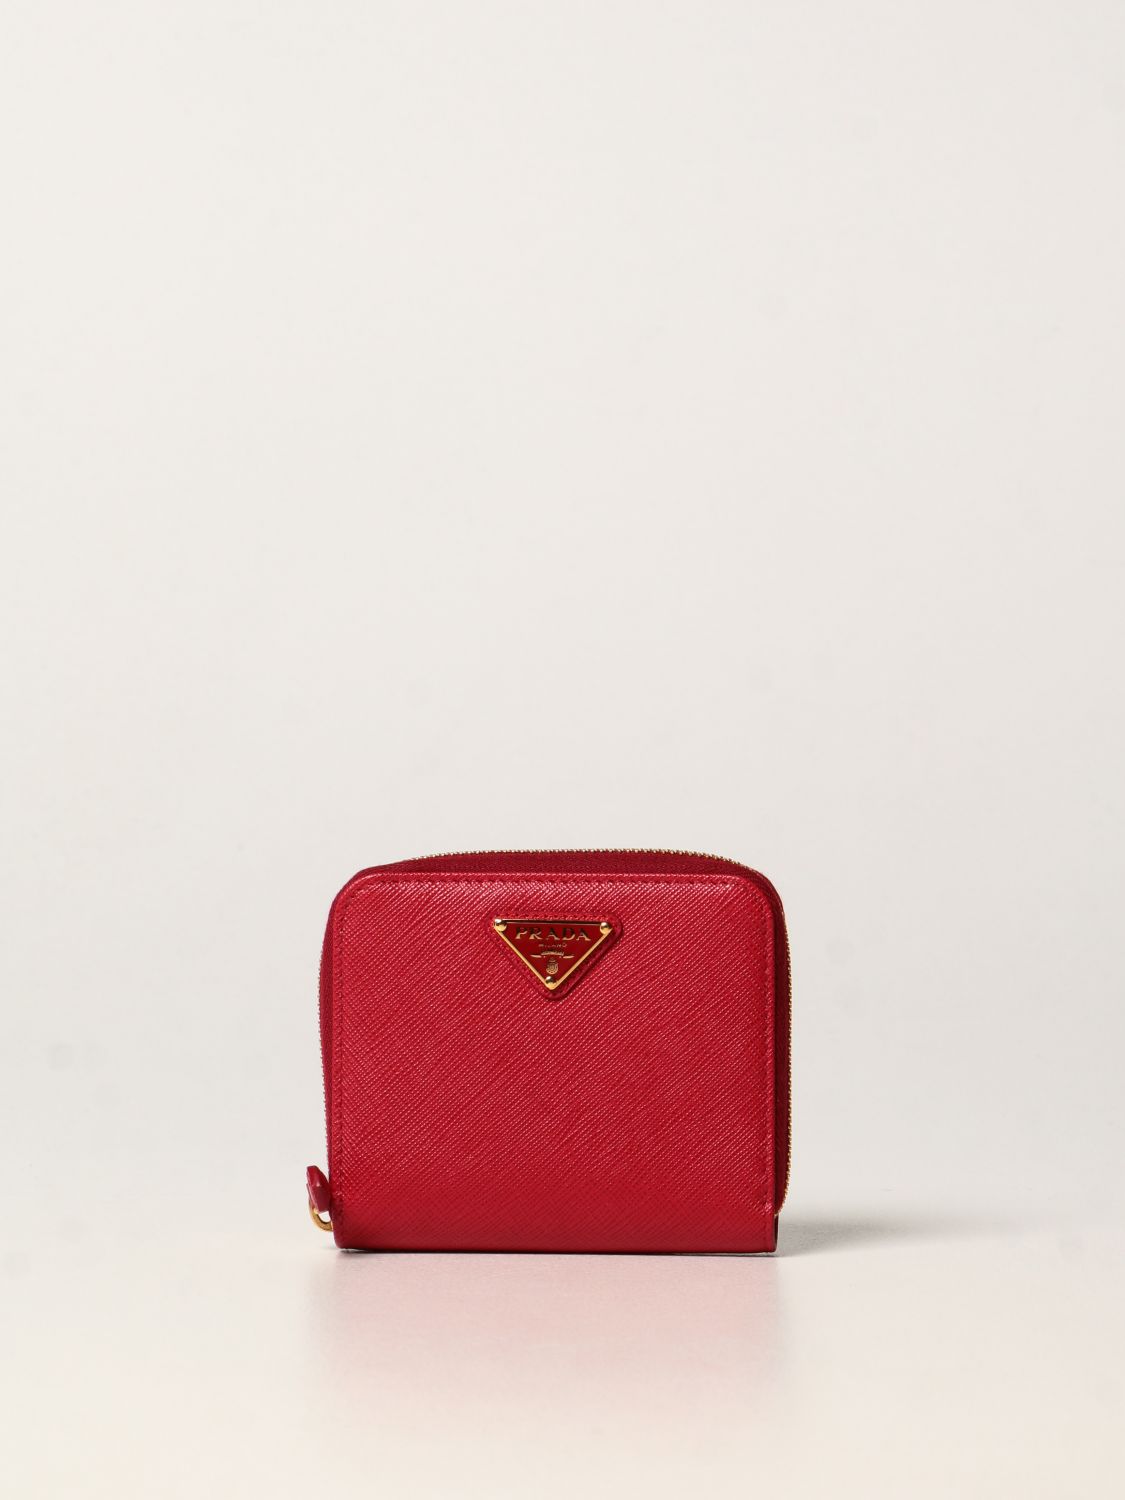 Prada Saffiano Leather Zip Around Wallet in Red